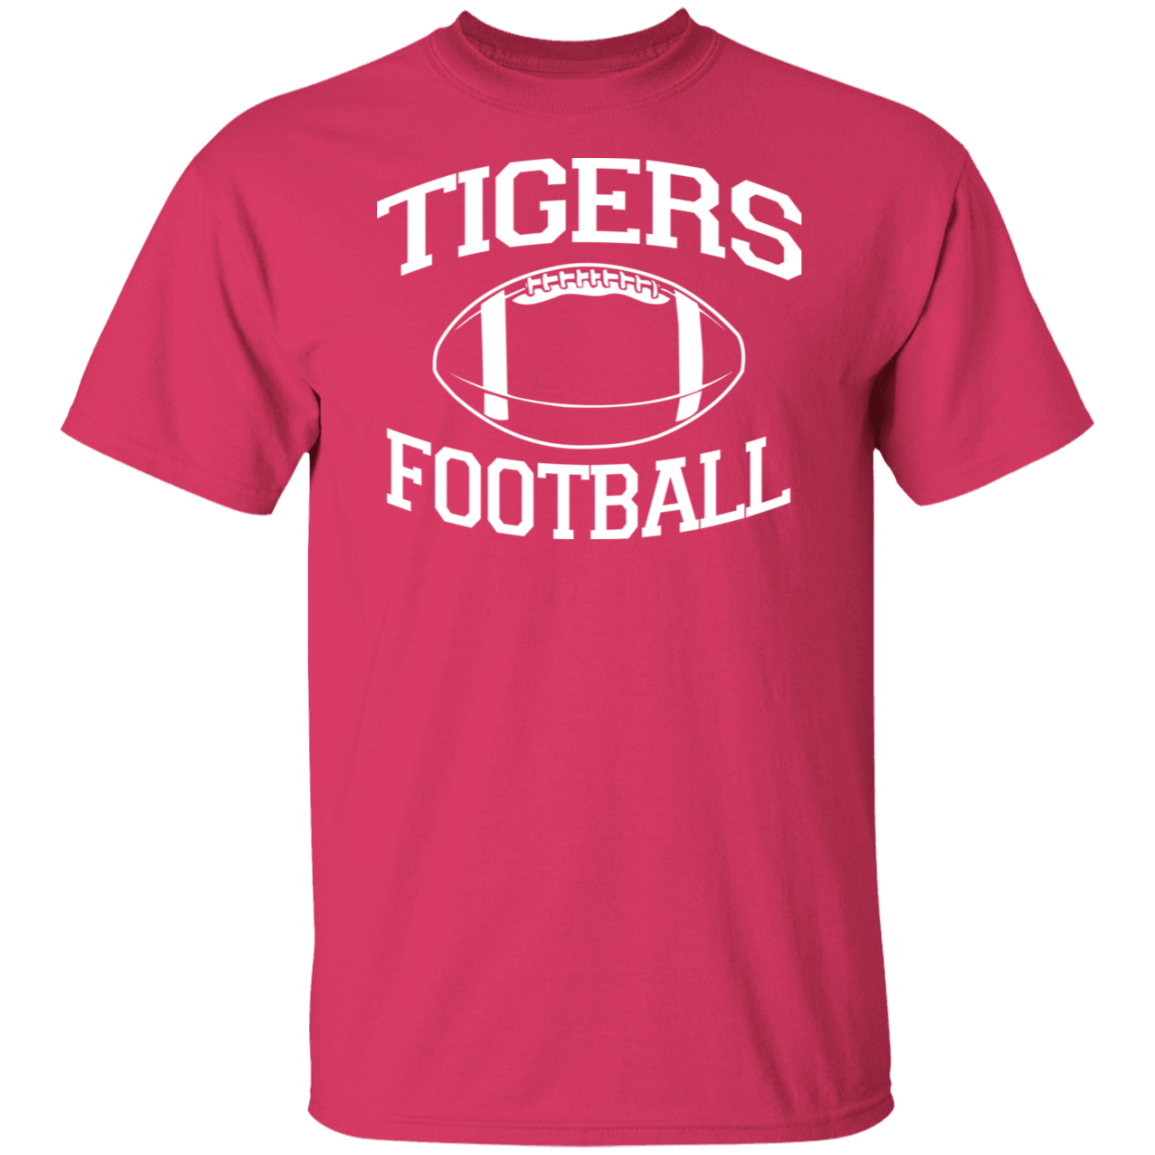 Tigers Football White Print T-Shirt